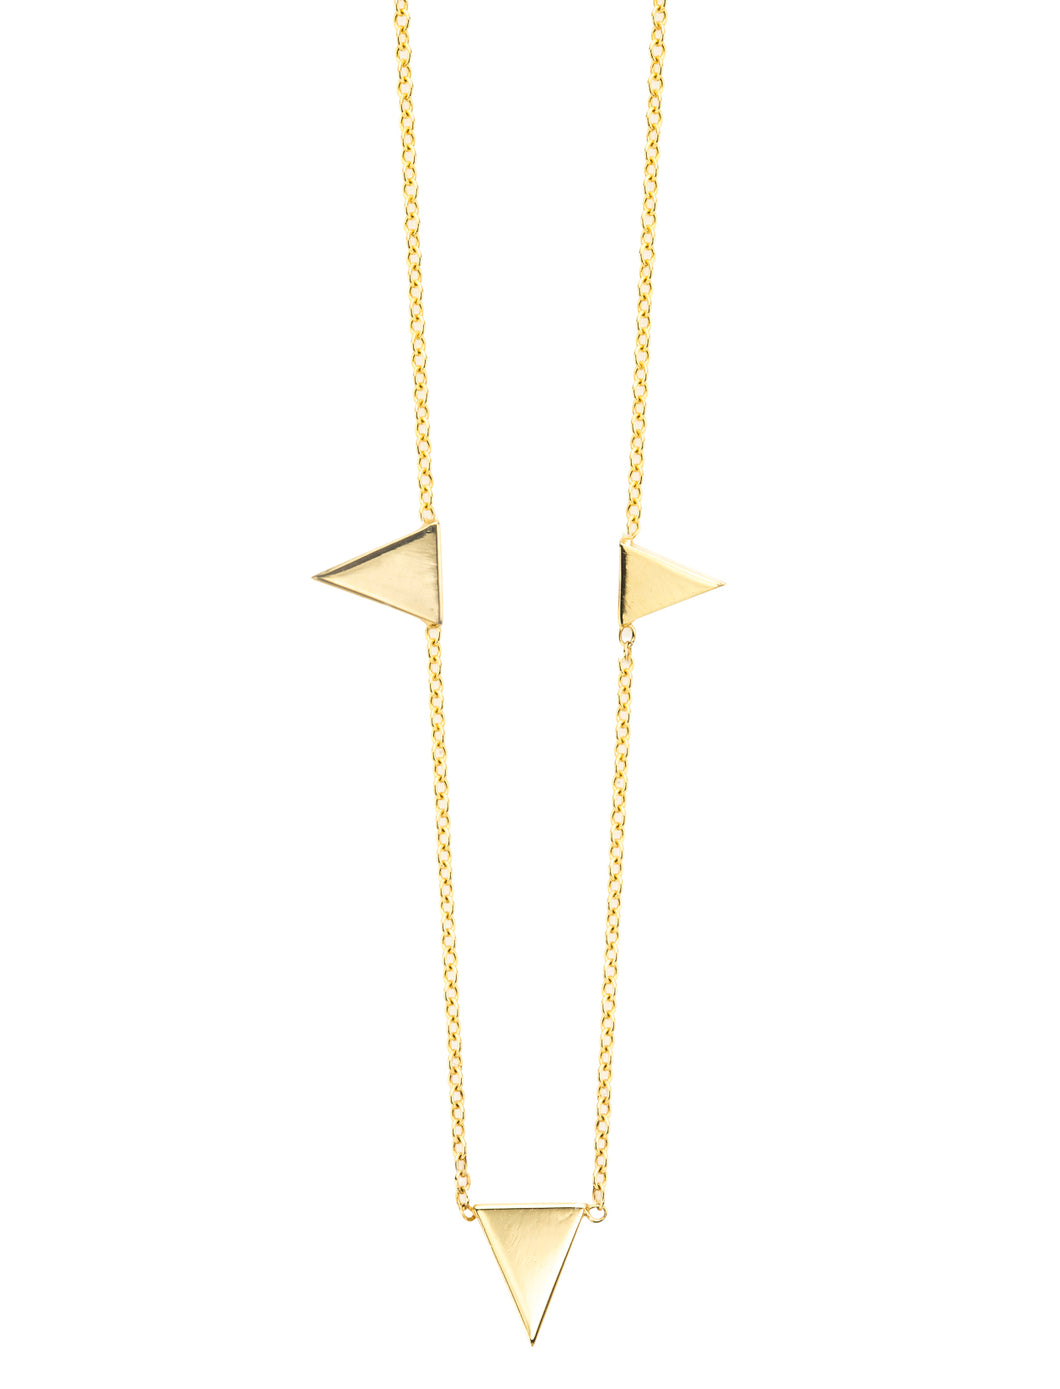 Triple Triangle Edge | Kacey K Jewelry.